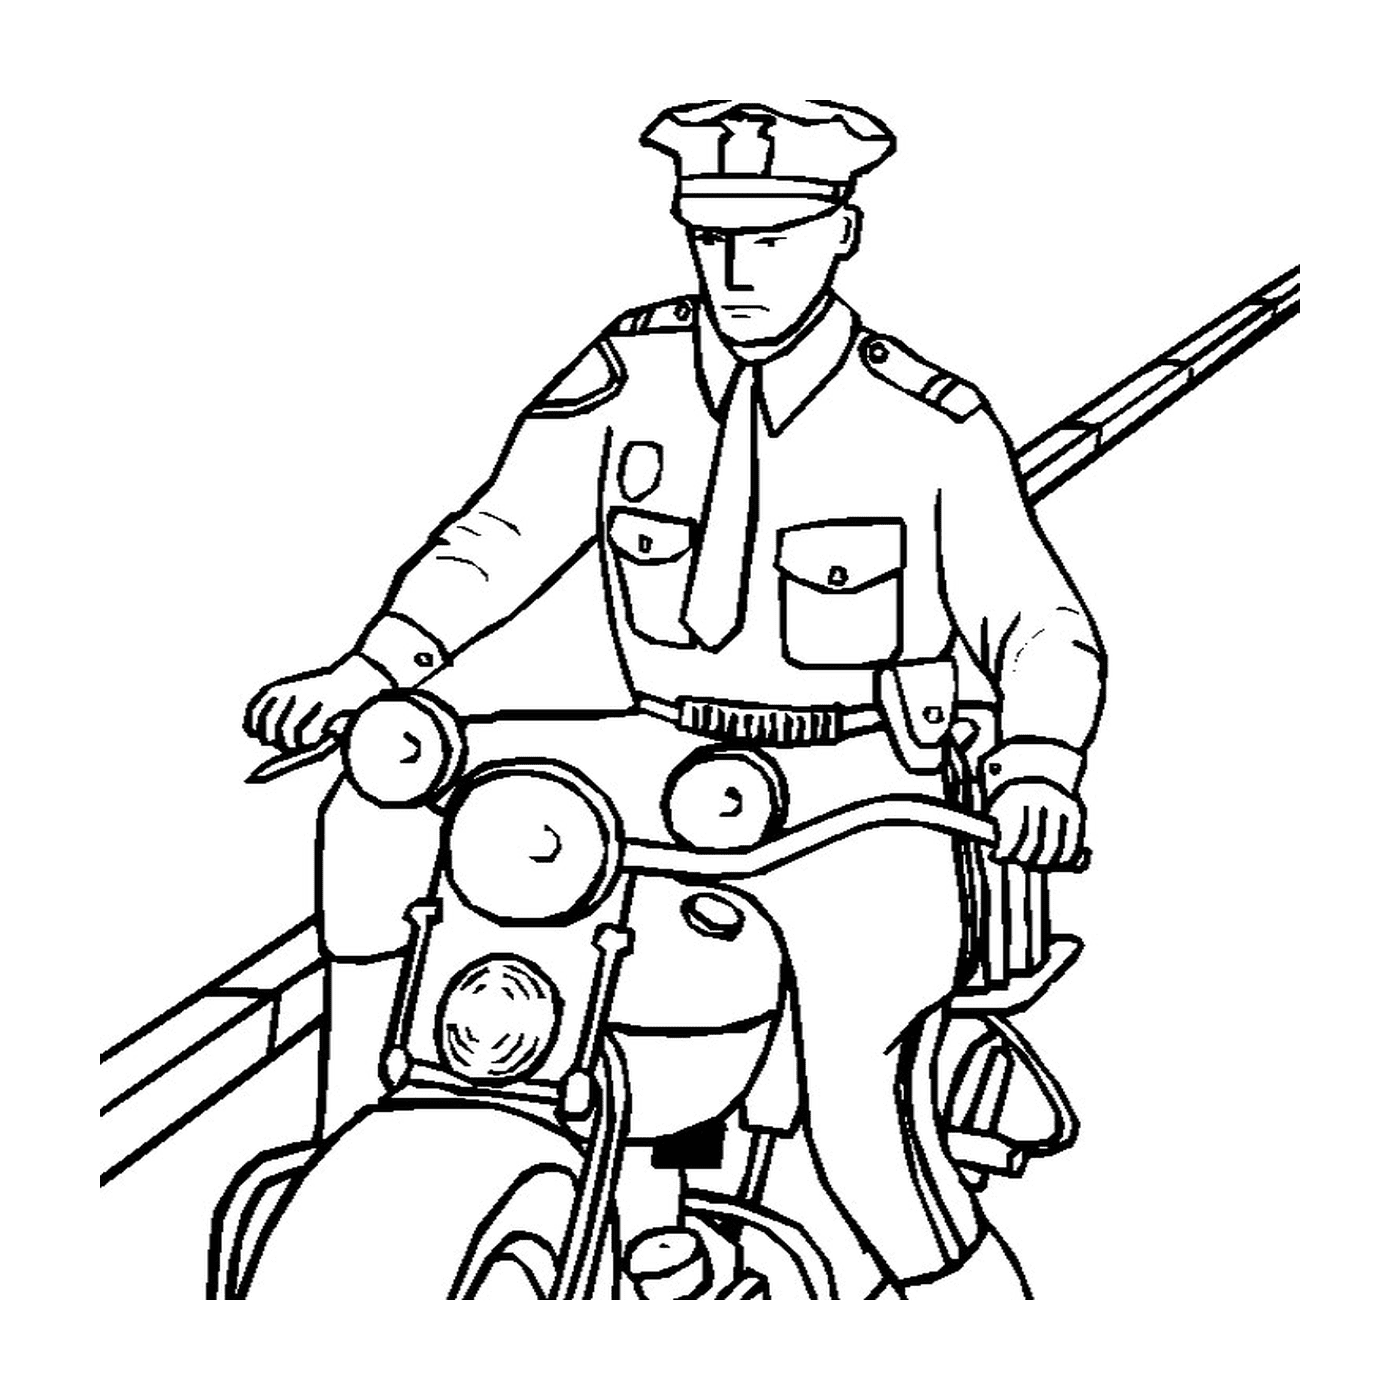  policeman driving motorcycle 